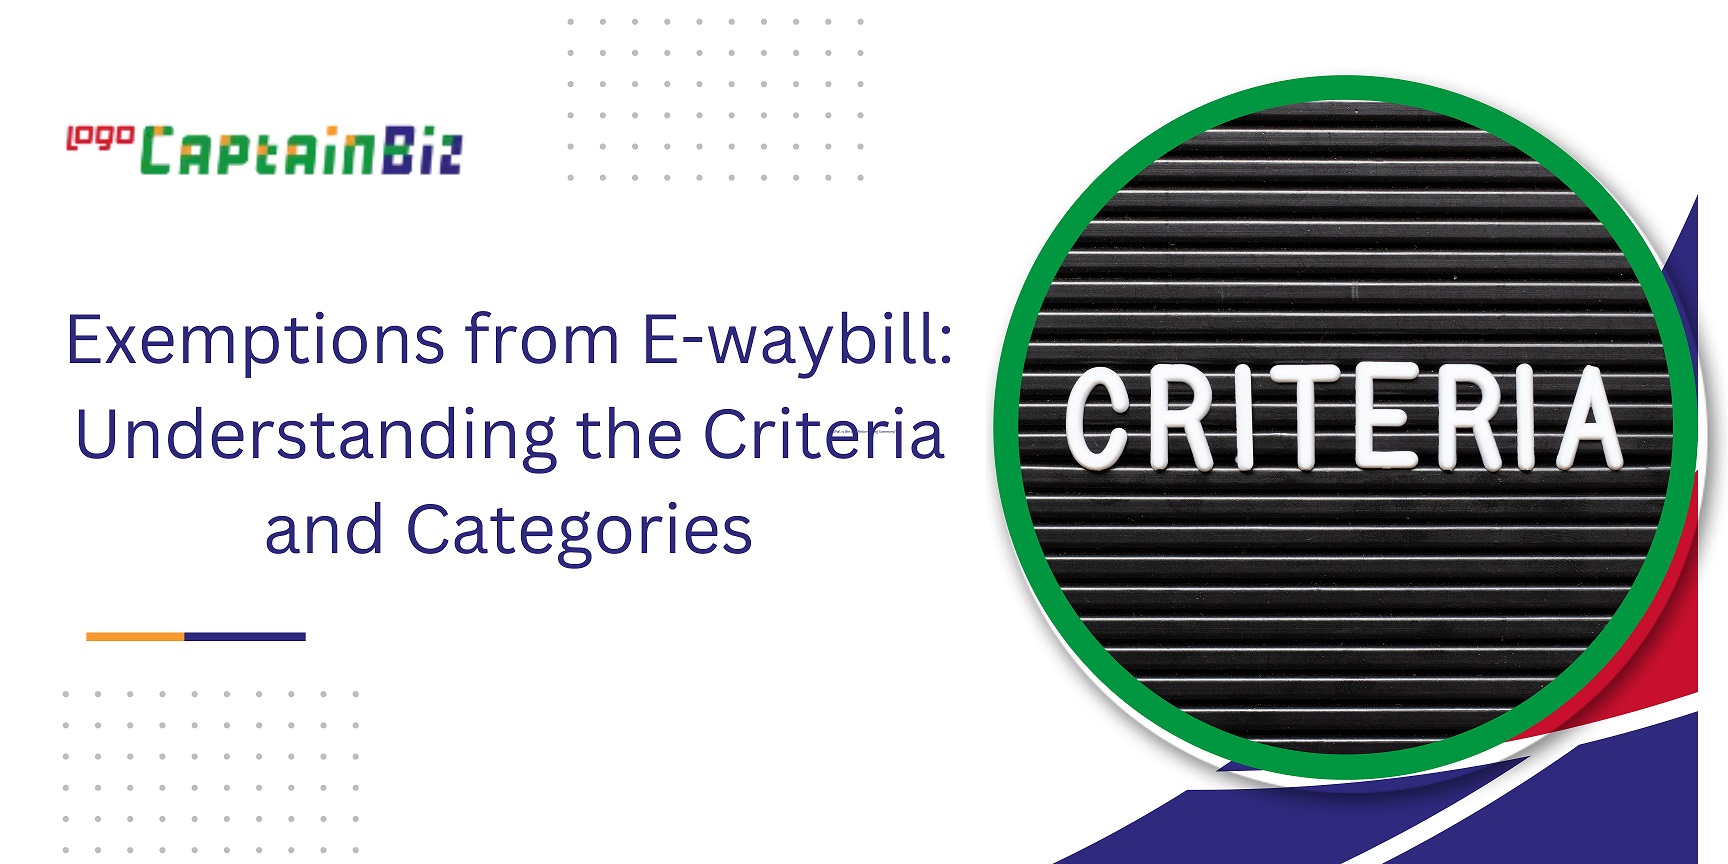 CaptainBiz: exemptions from e-waybill understanding the criteria and categories